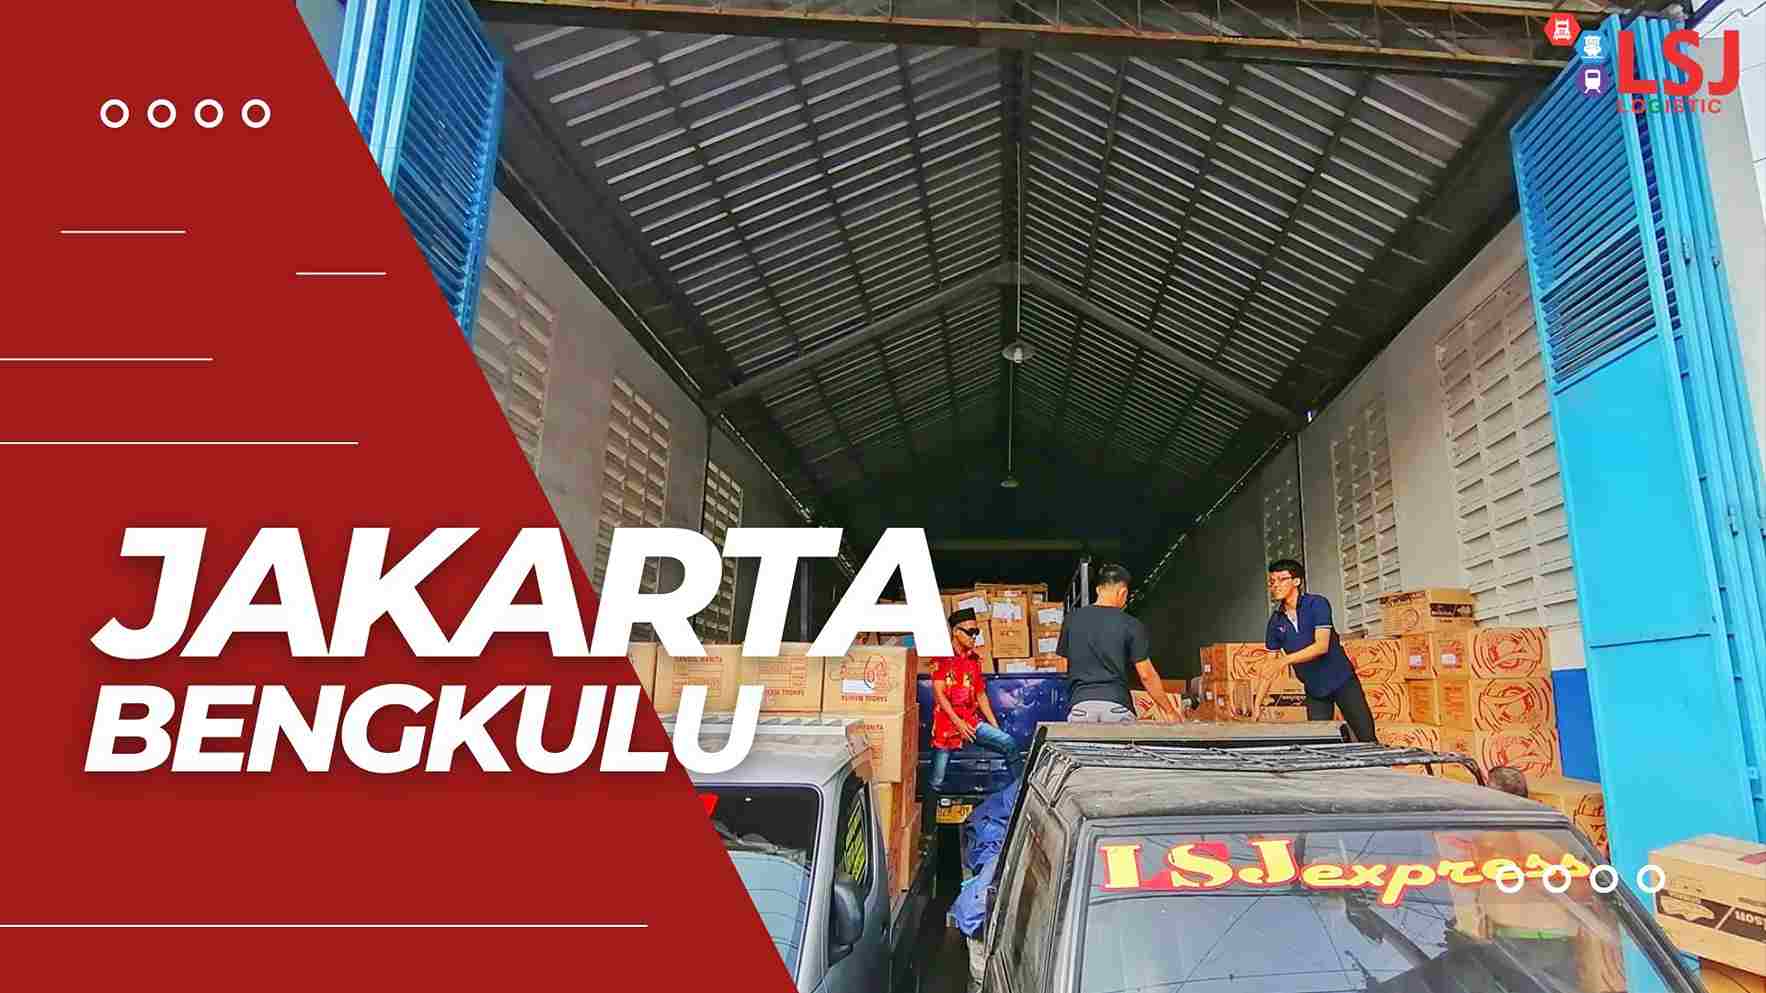 Ongkos Kirim Container Jakarta Bengkulu